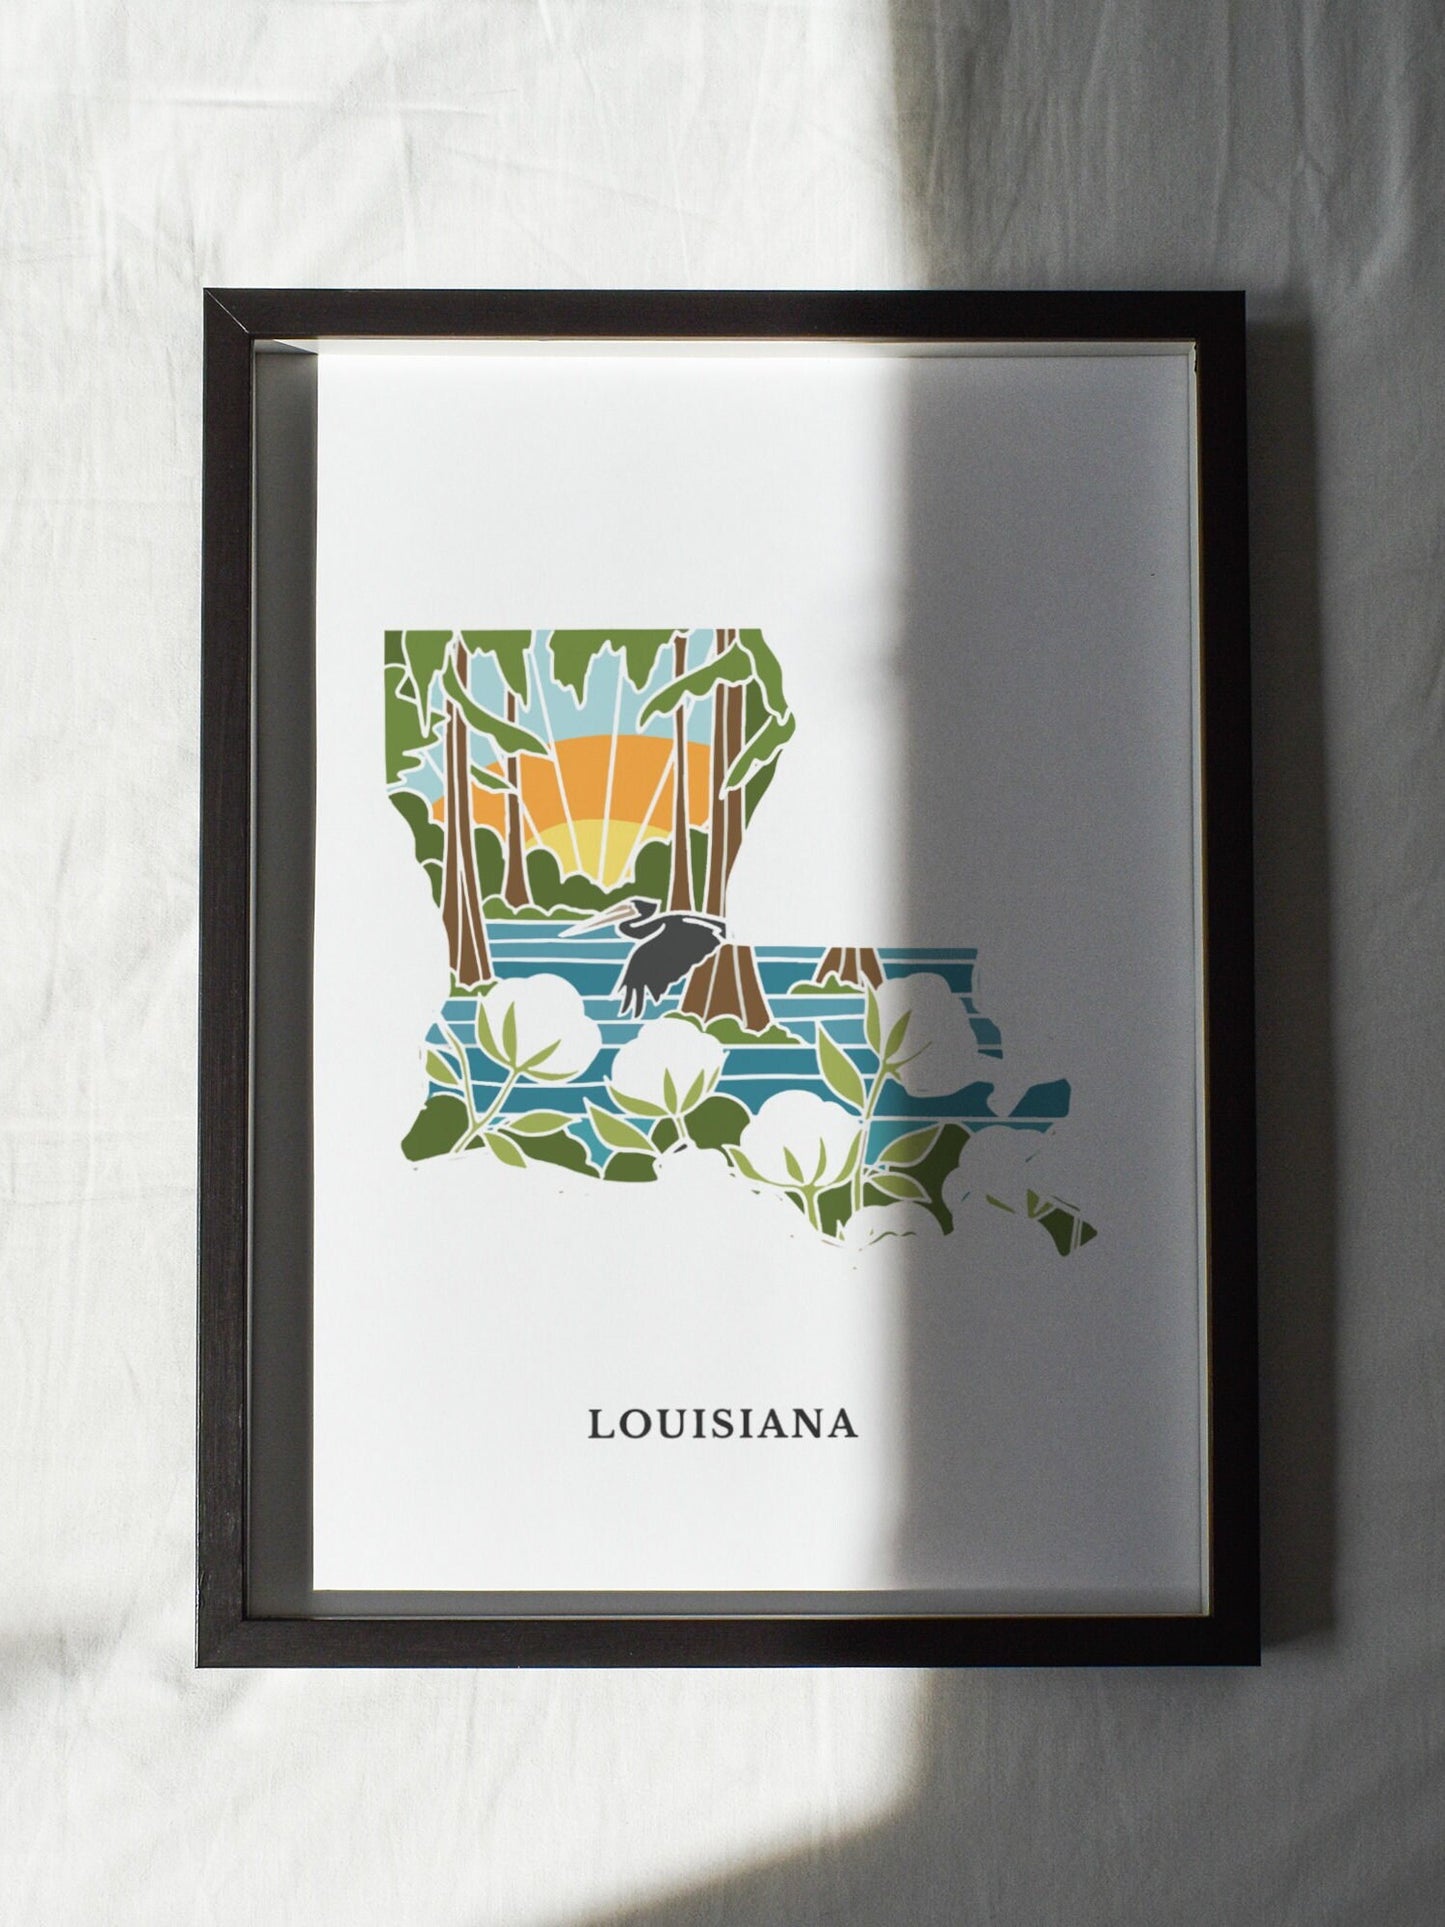 Louisiana Physical Art Print | State Wall Art | 5x7, 8x10, 11x14, 16x20 Archival Art Print | Louisiana Illustrated Poster